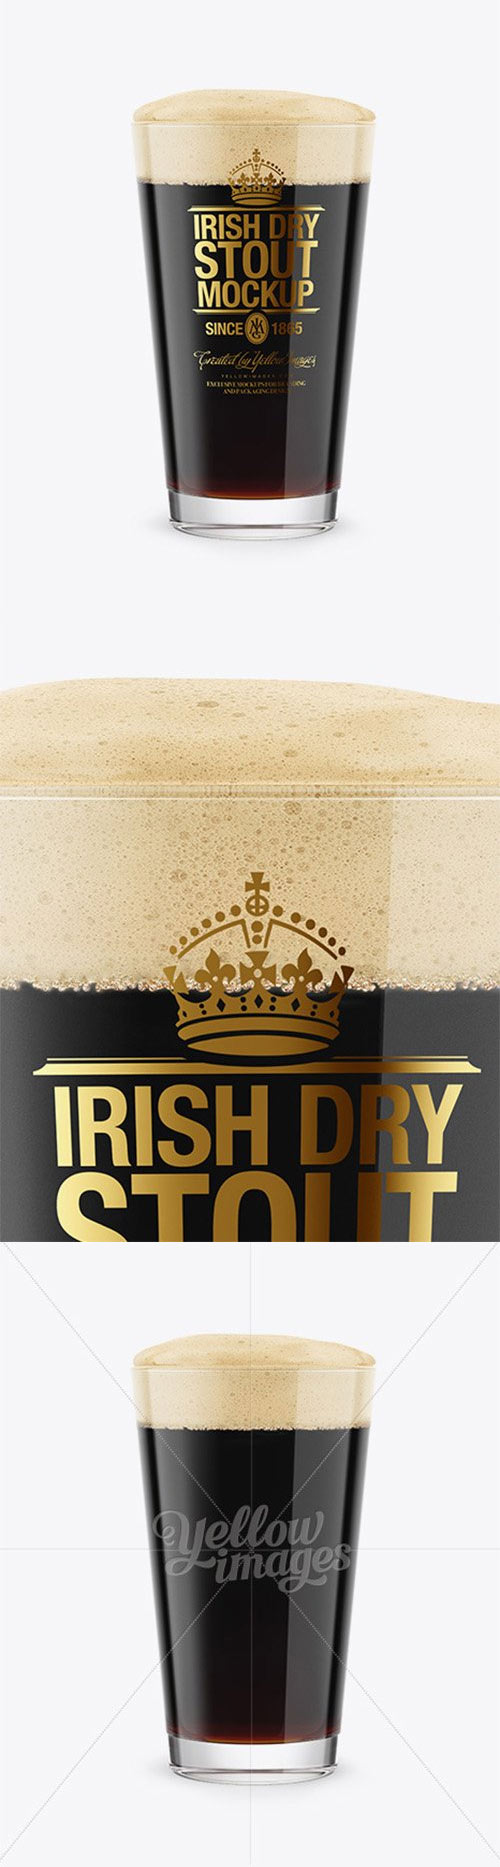 Irish Dry Stout Beer Glass Mockup